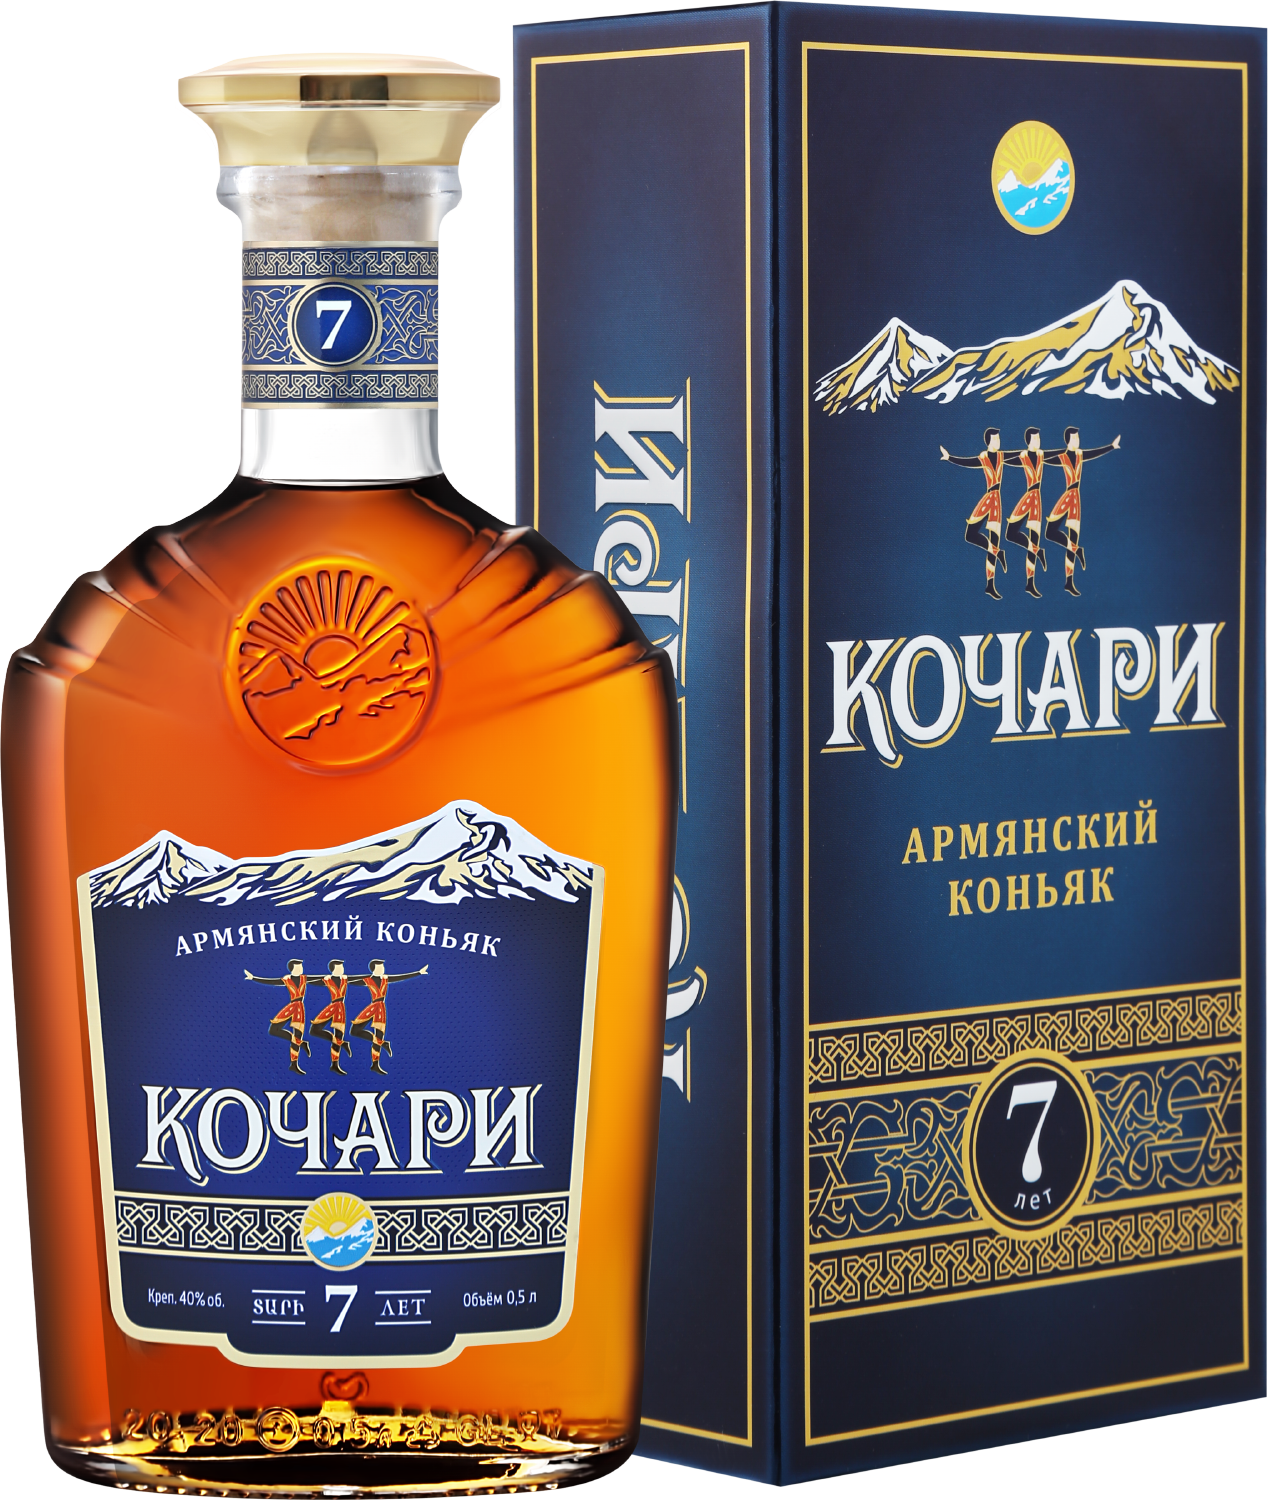 kochari armenian brandy 3 y o Kochari Armenian Brandy 7 Y.O. (gift box)